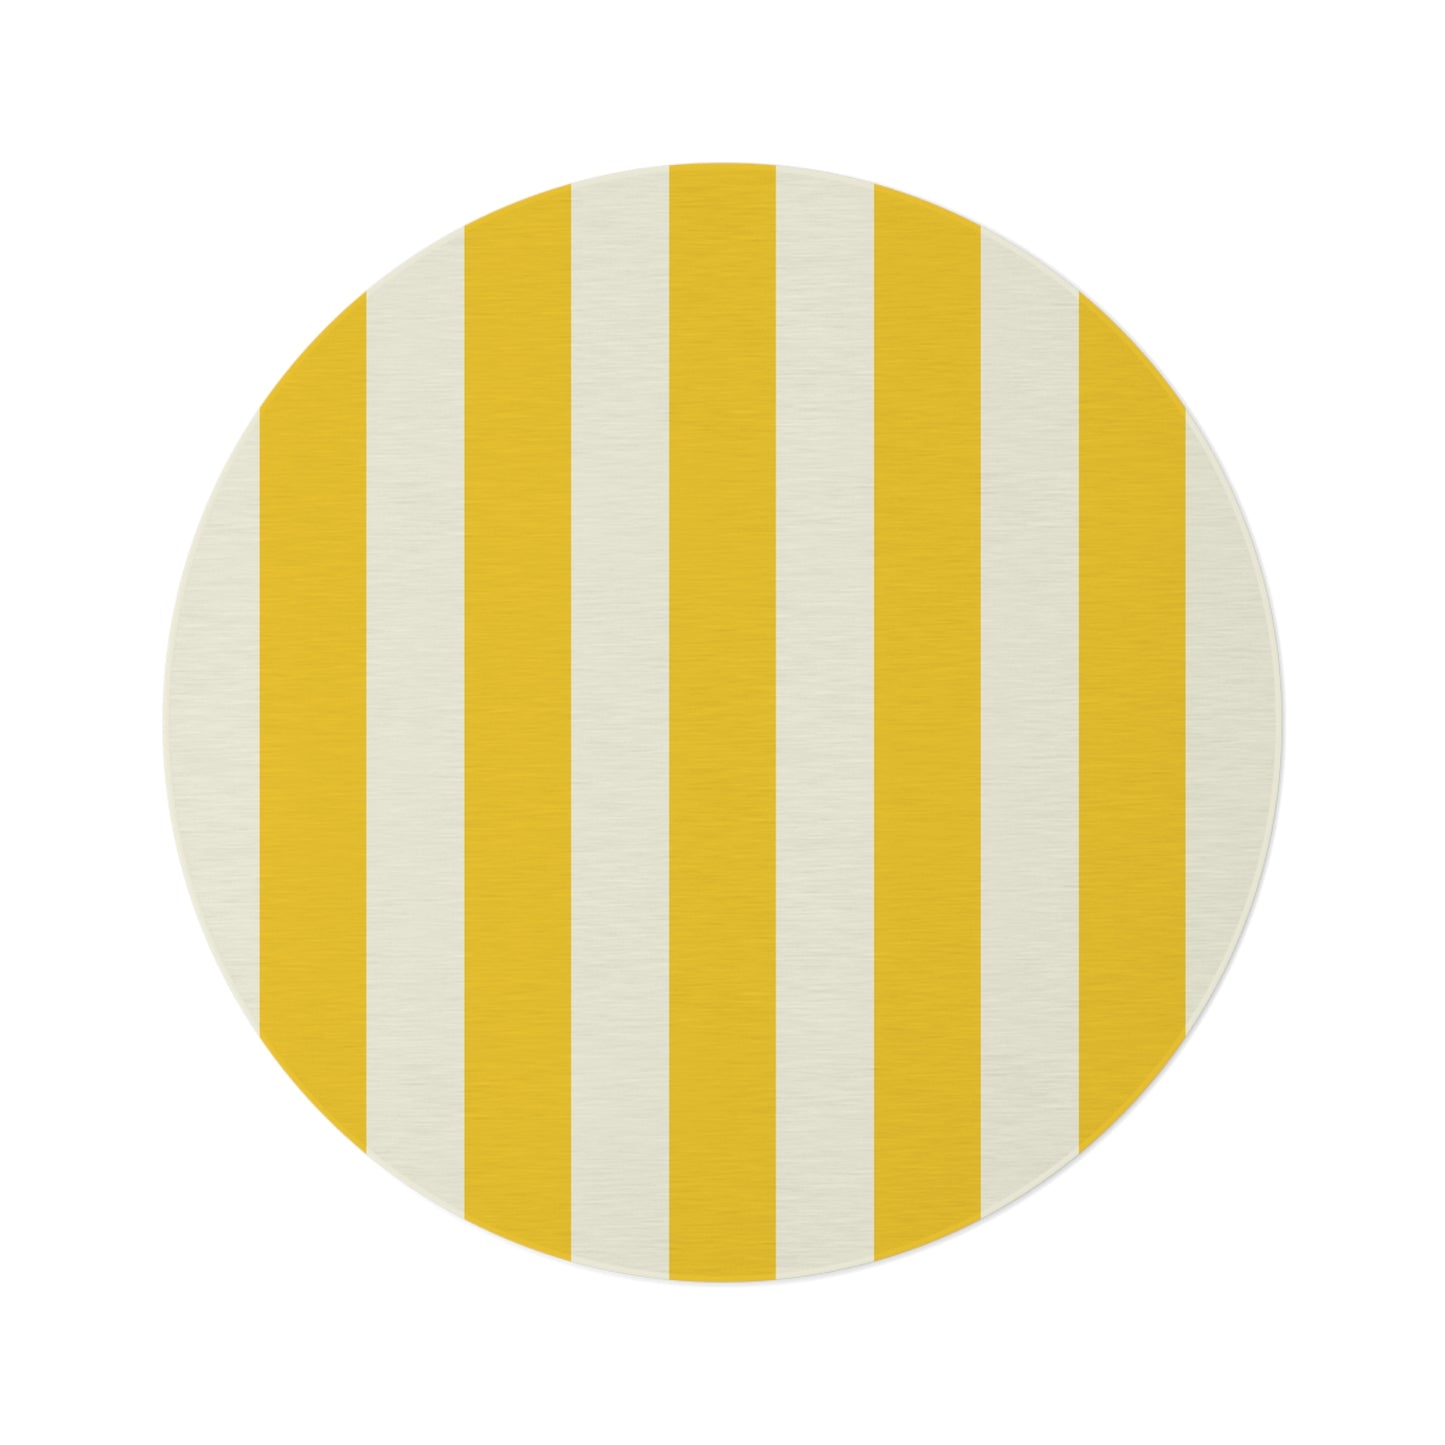 Lemony Yellow Stripes Round Rug